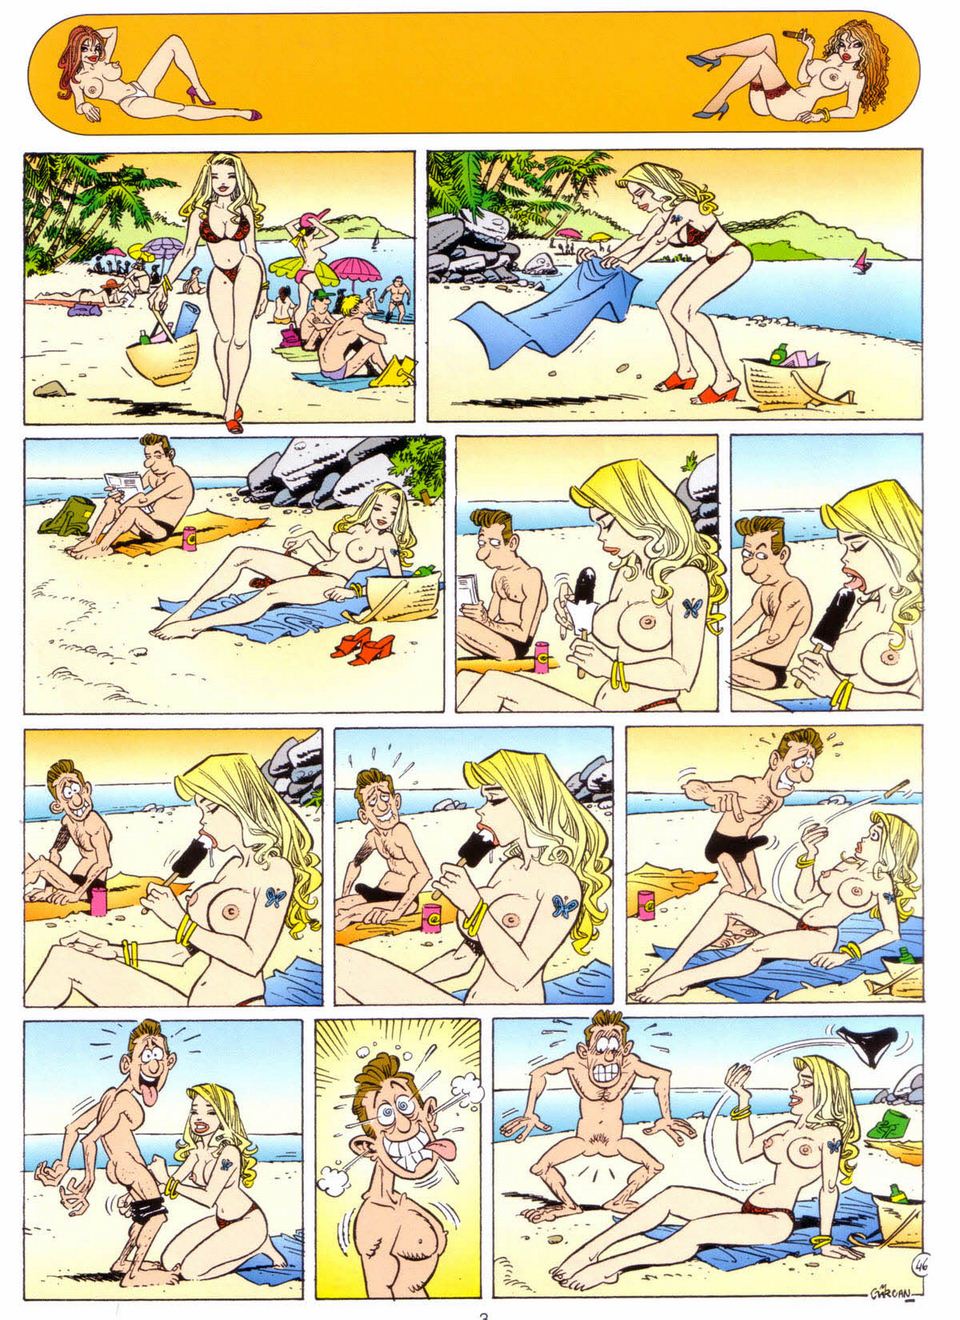 Porn comedy animation comic